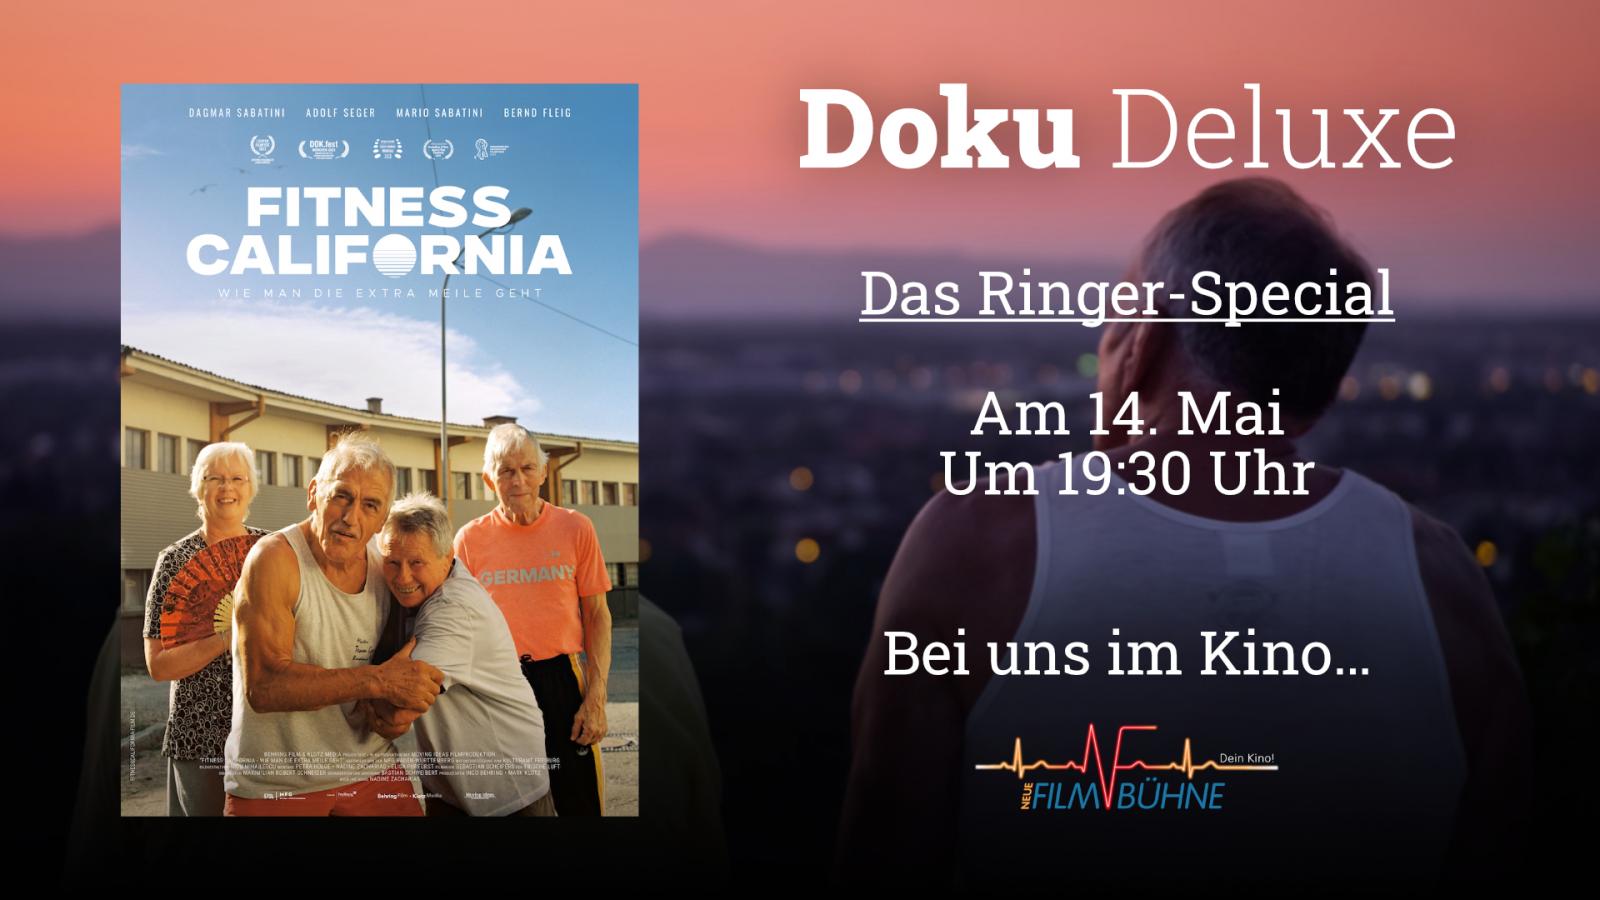 Doku Deluxe: Das Ringer-Special